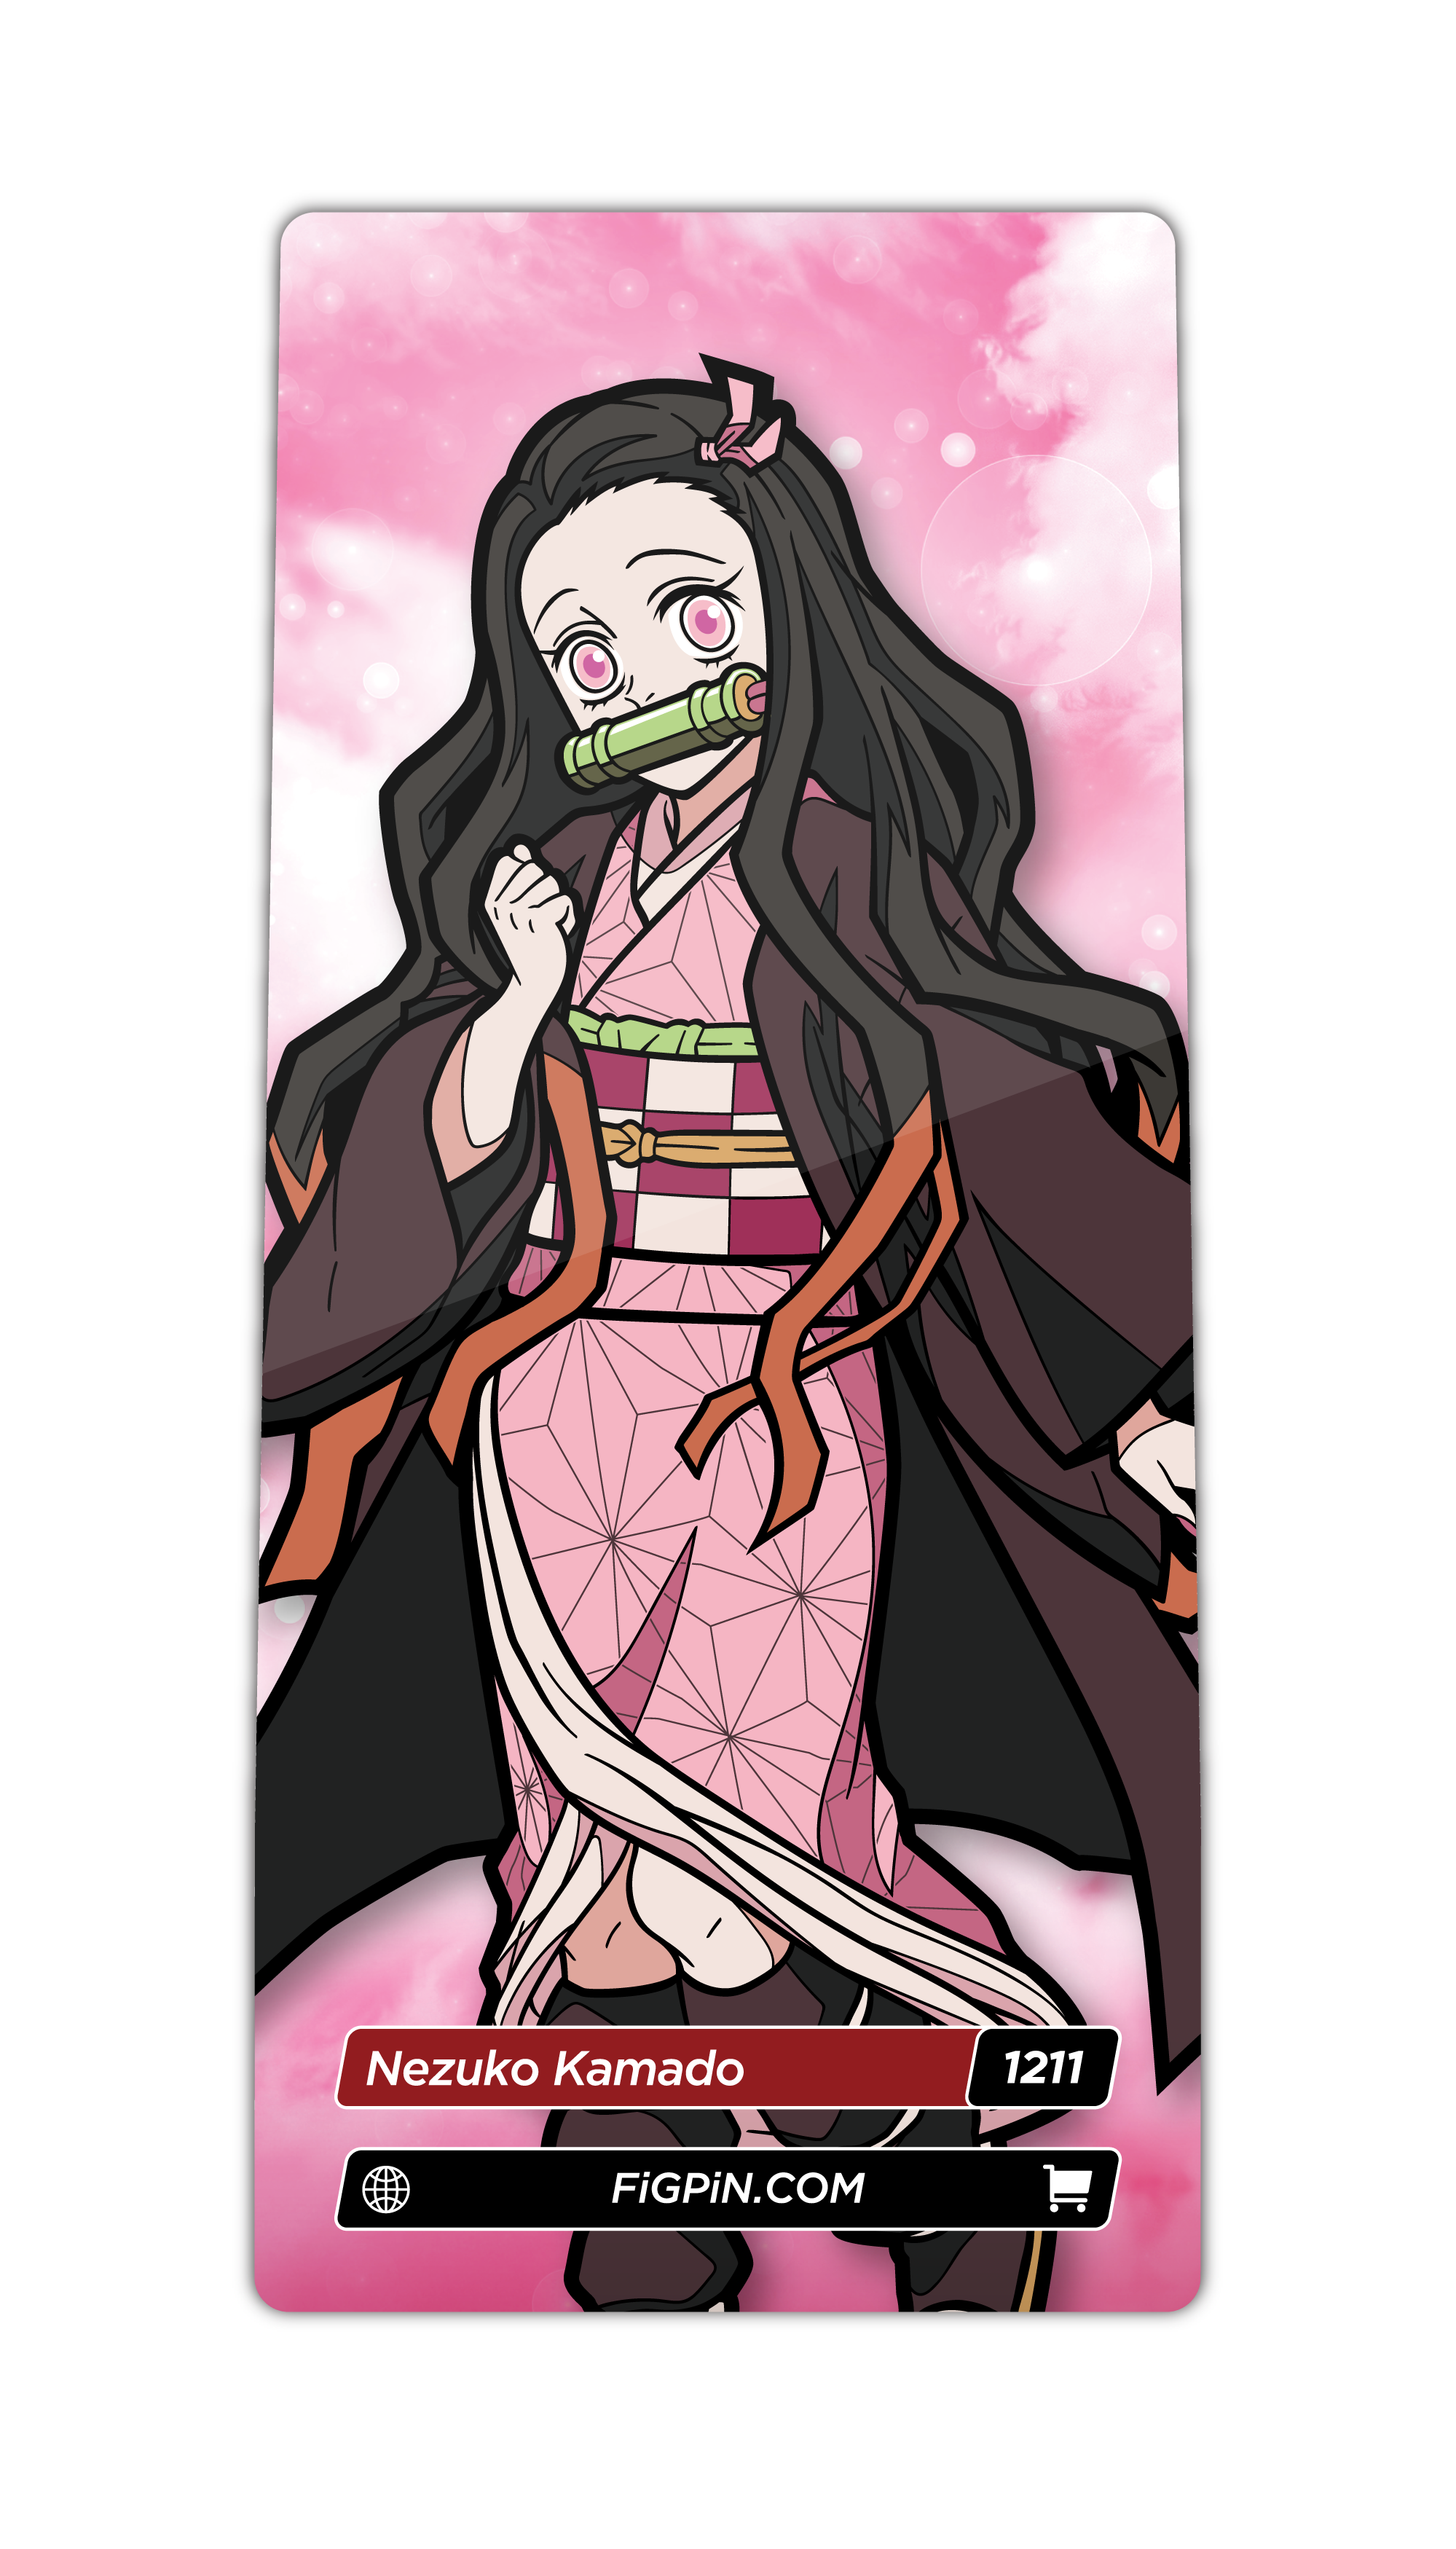 Character card of Demon Slayer's Nezuko Kamado with text “Nezuko Kamado (1211)” and link to FiGPiN’s website